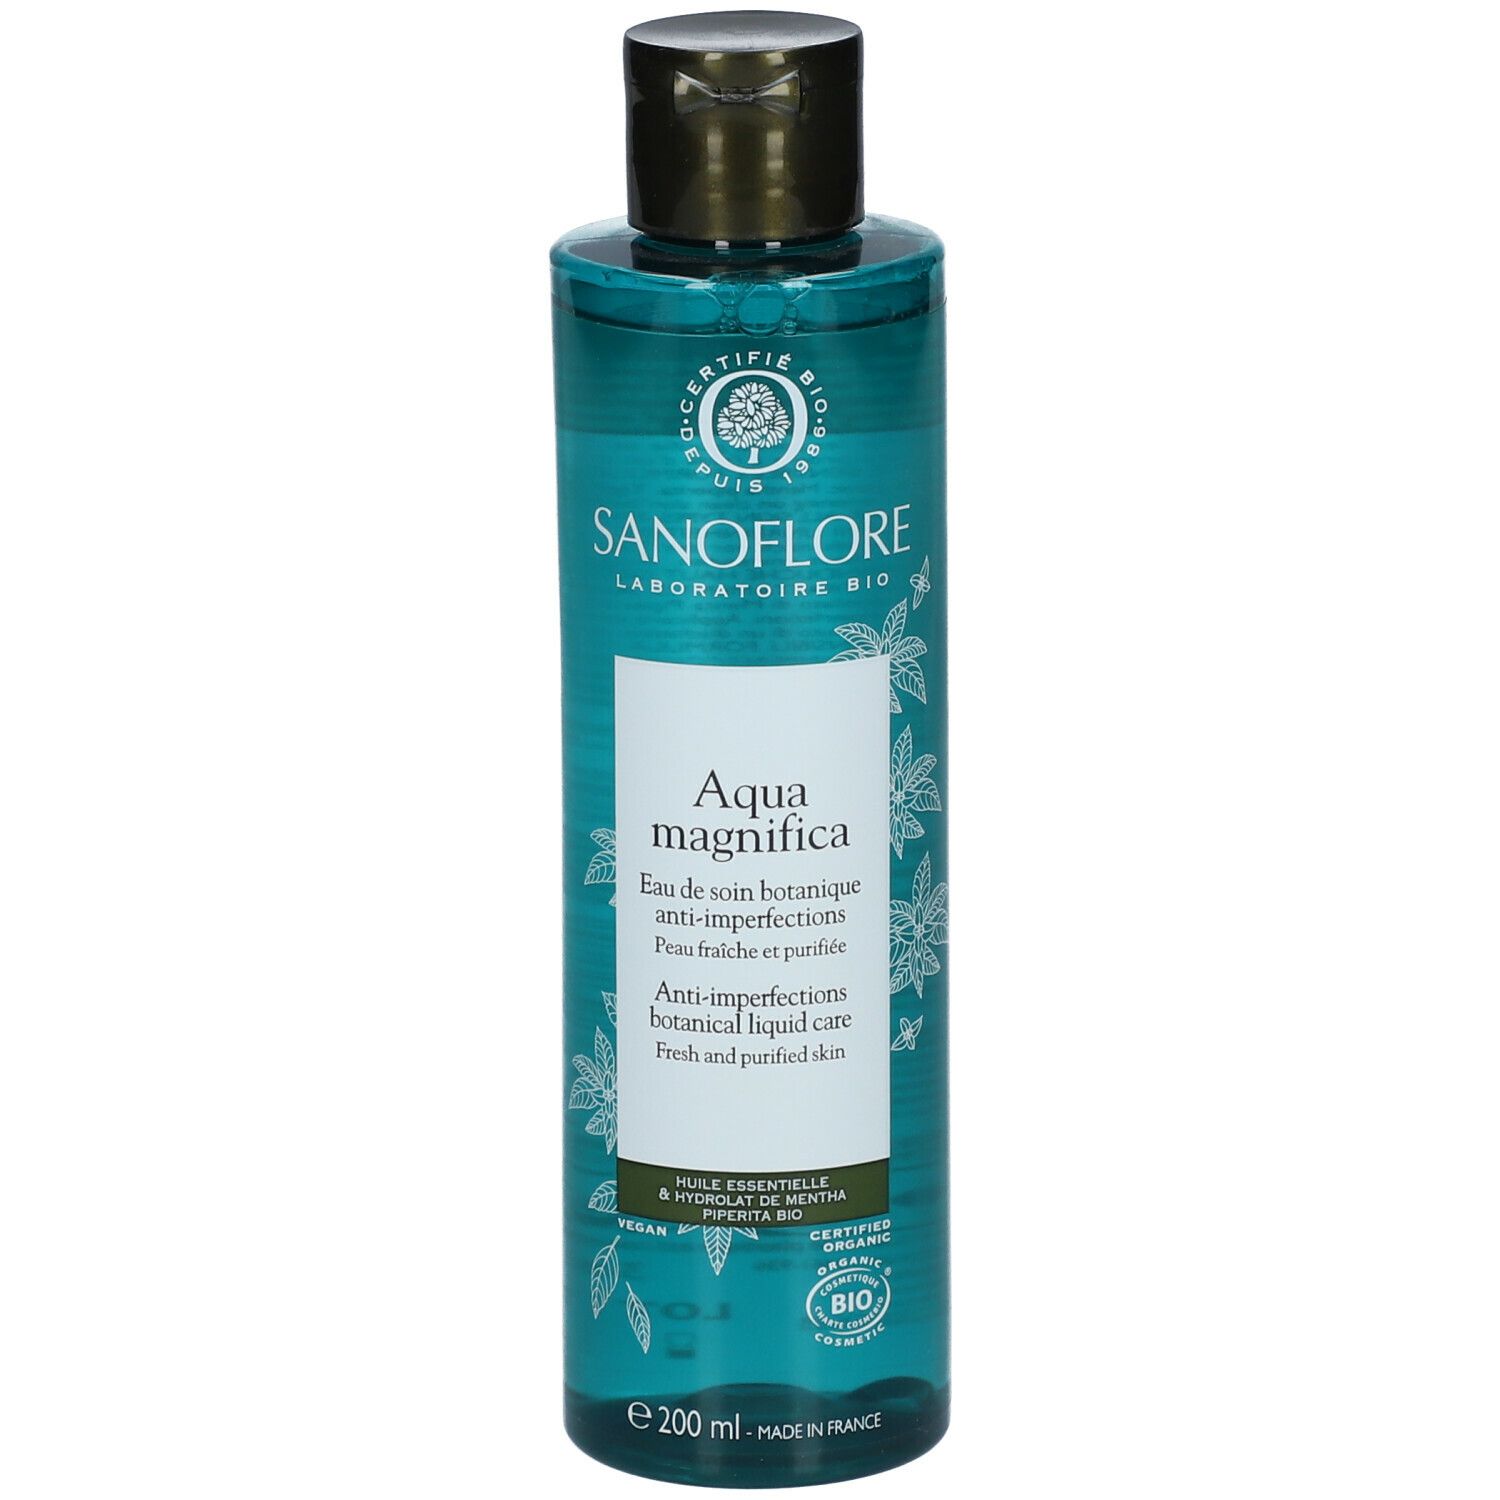 SANOFLORE Aqua magnifica Eau de soin purifiante anti-imperfections certifée Bio 200 ml